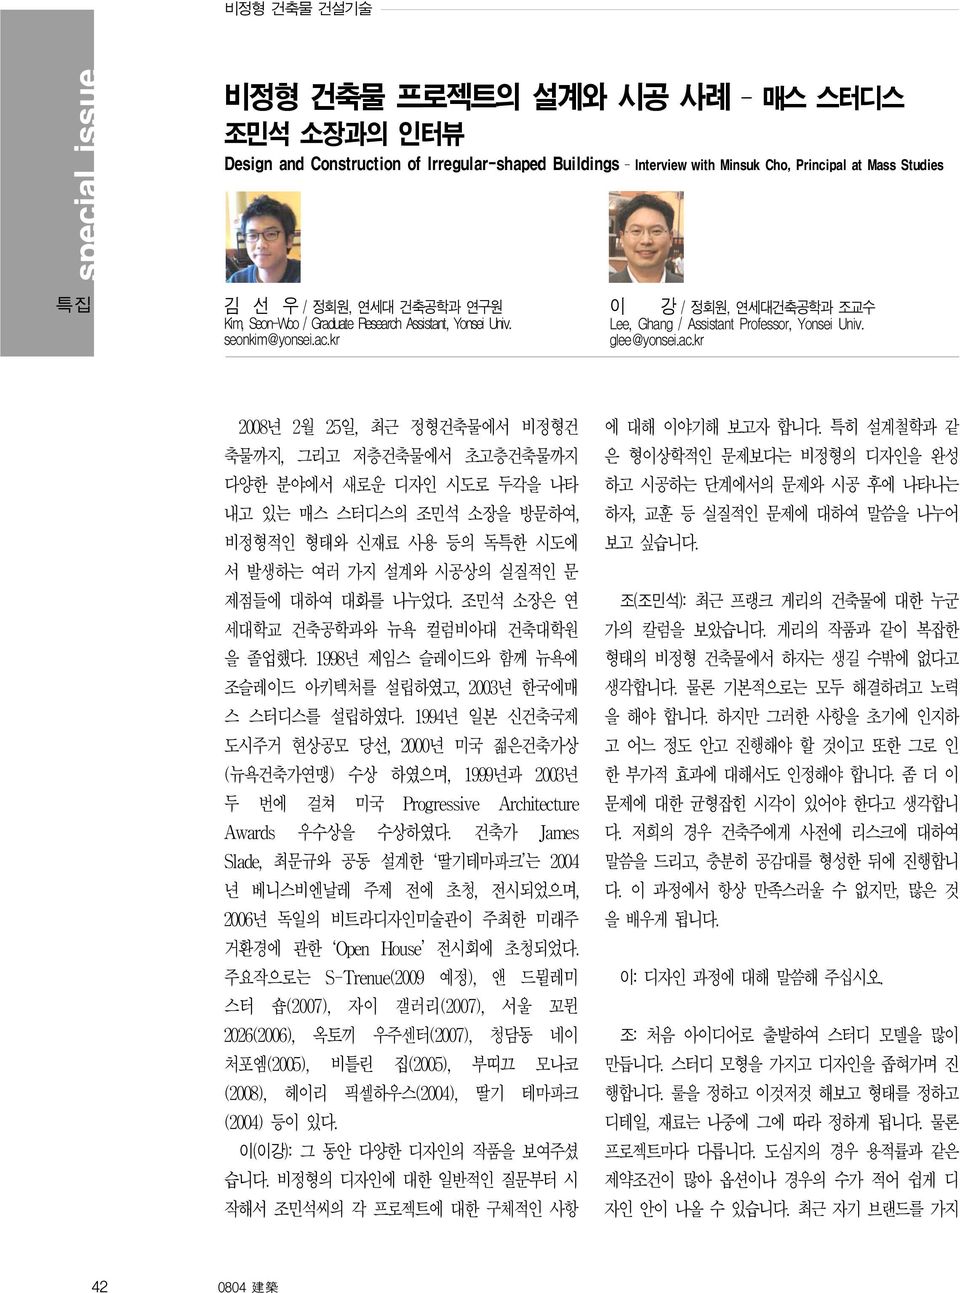 kr 이 강 / 정회원, 연세대건축공학과 조교수 Lee, Ghang / Assistant Professor, Yonsei Univ. glee@yonsei.ac.